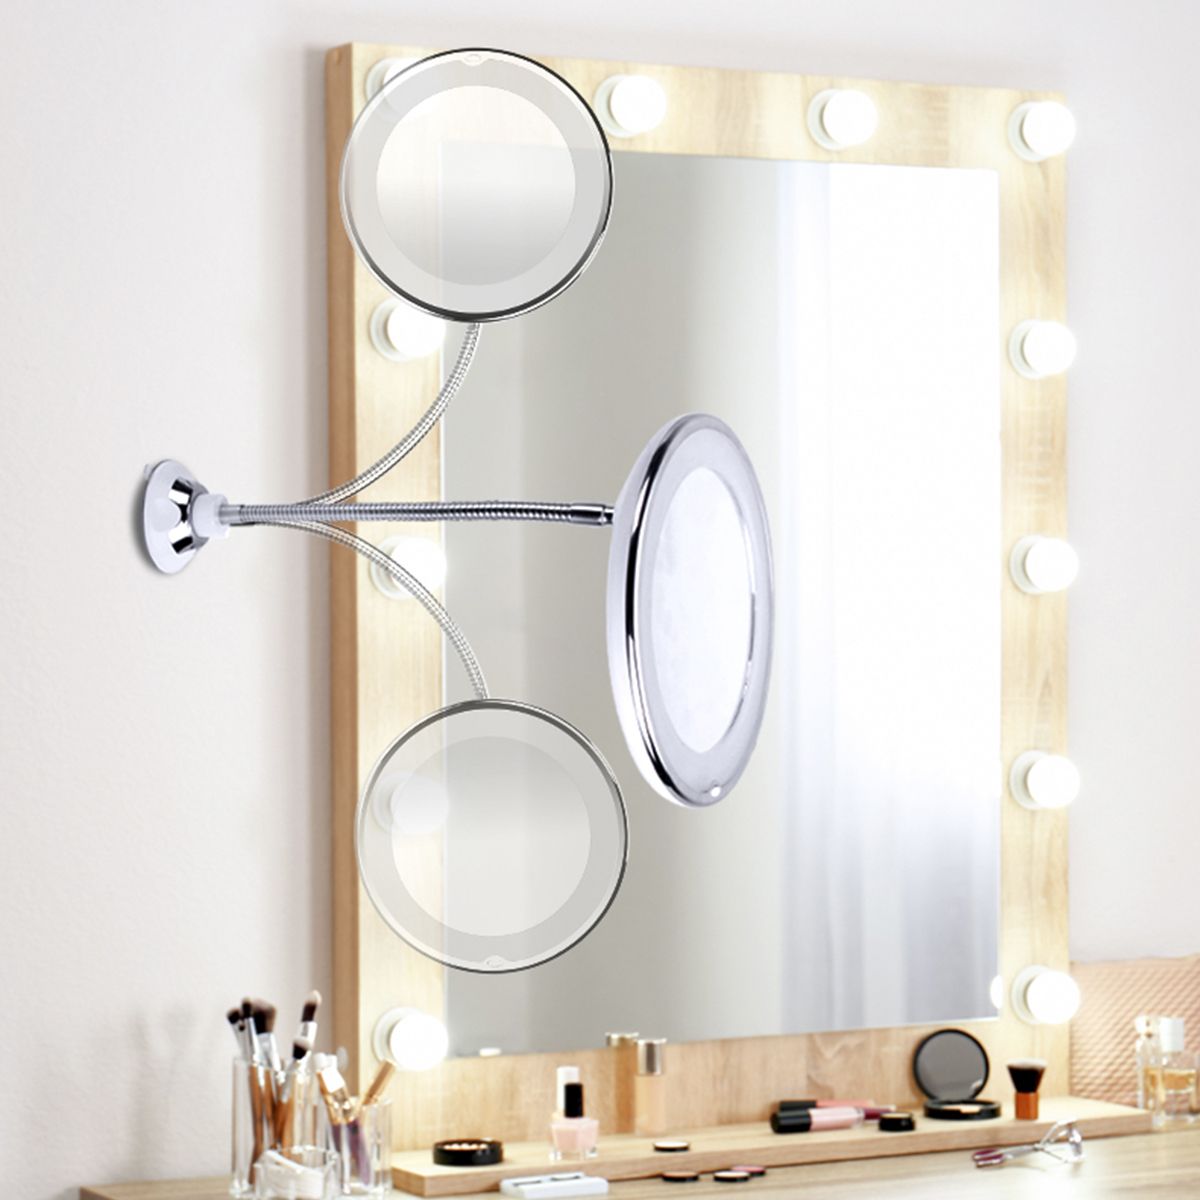 10X-Magnifying-Flexible-LED-Makeup-Mirror-Light-360deg-Rotary-Super-Suction-Mirrors-1560799